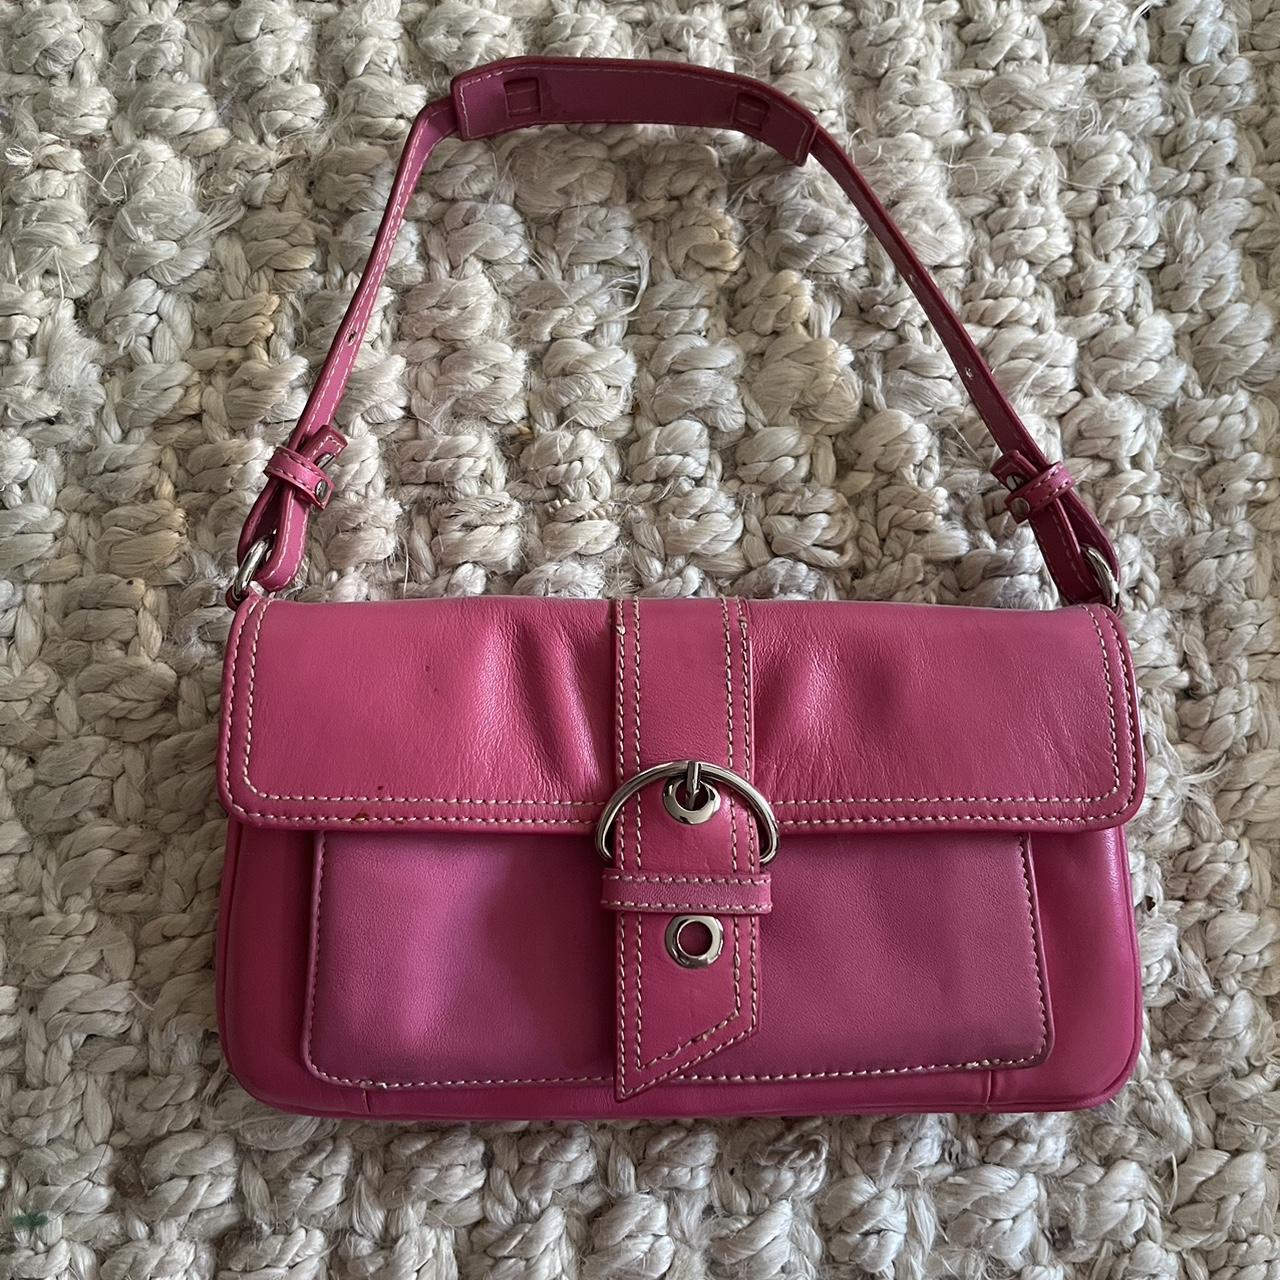 Giani Bernini Women's Pink Bag